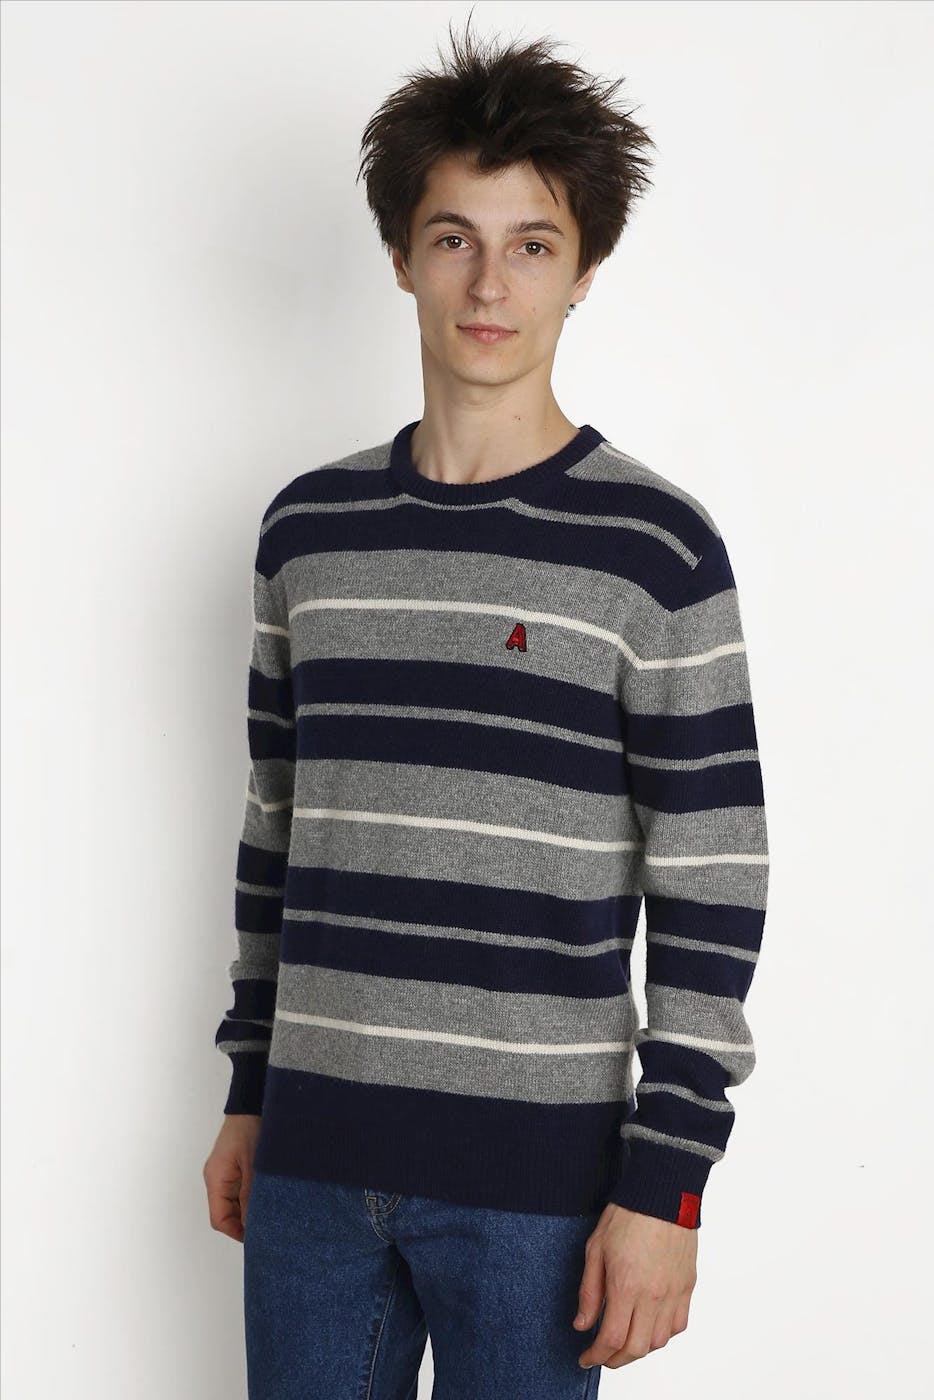 Antwrp - Blauw-grijze Striped Knit Trui